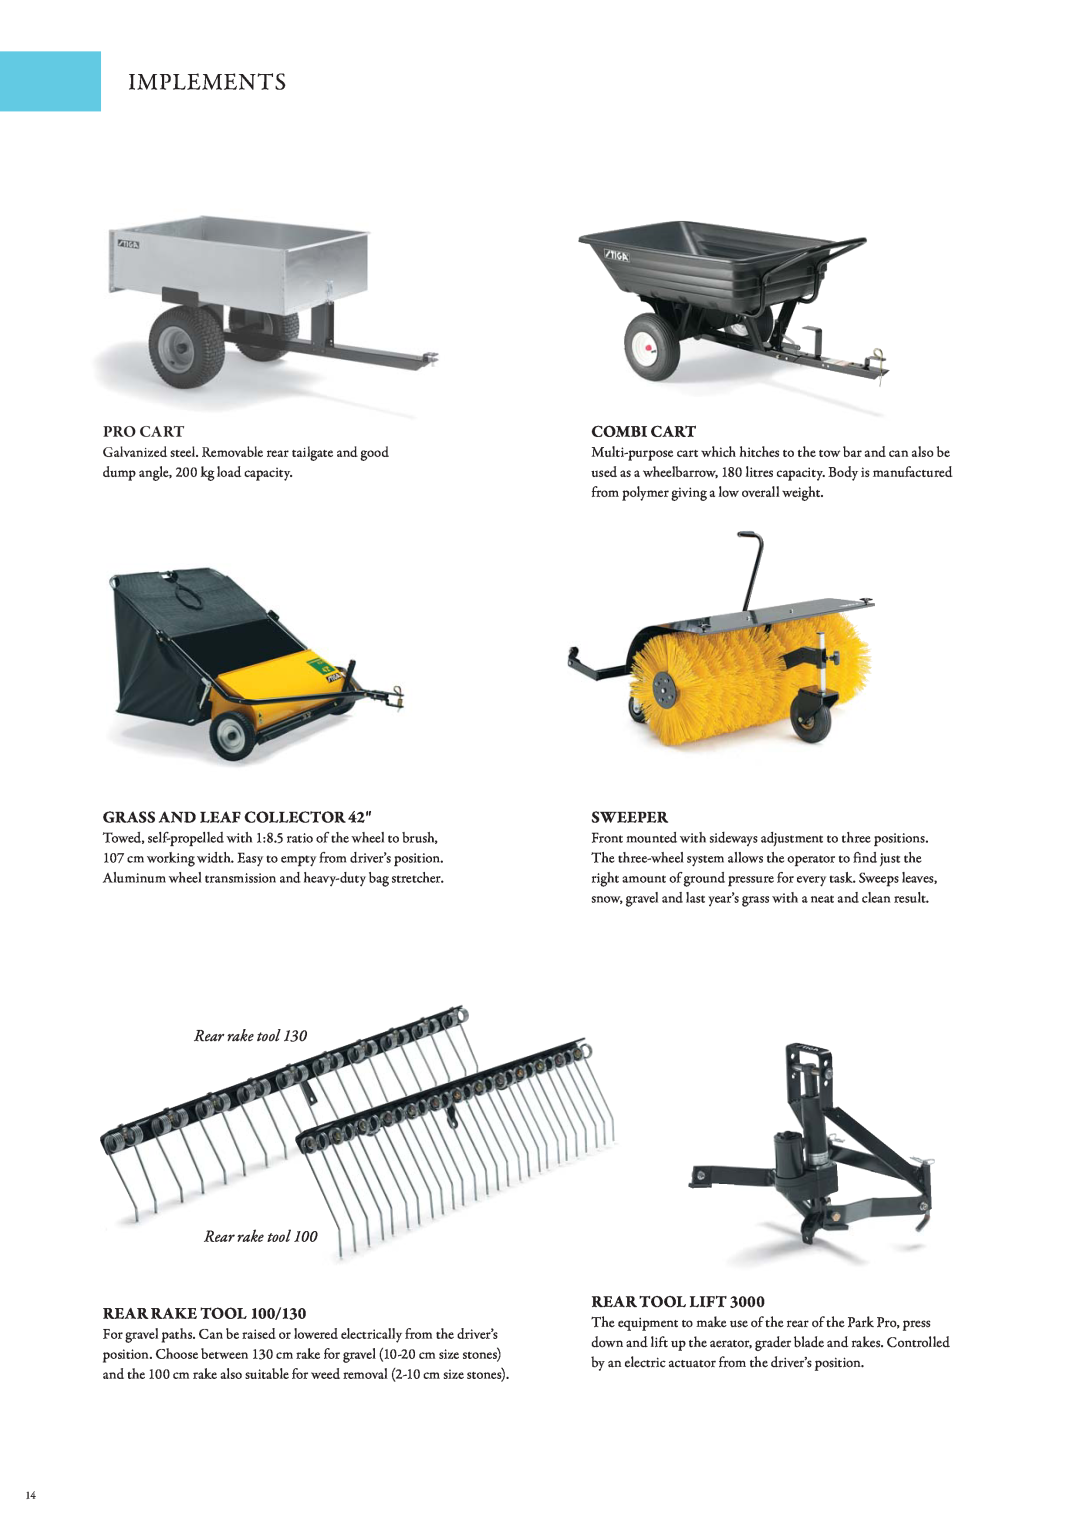 Stiga Snow Throwers Pro Cart, Grass And Leaf Collector, Combi Cart, Sweeper, Rear rake tool Rear rake tool, Rear Tool Lift 